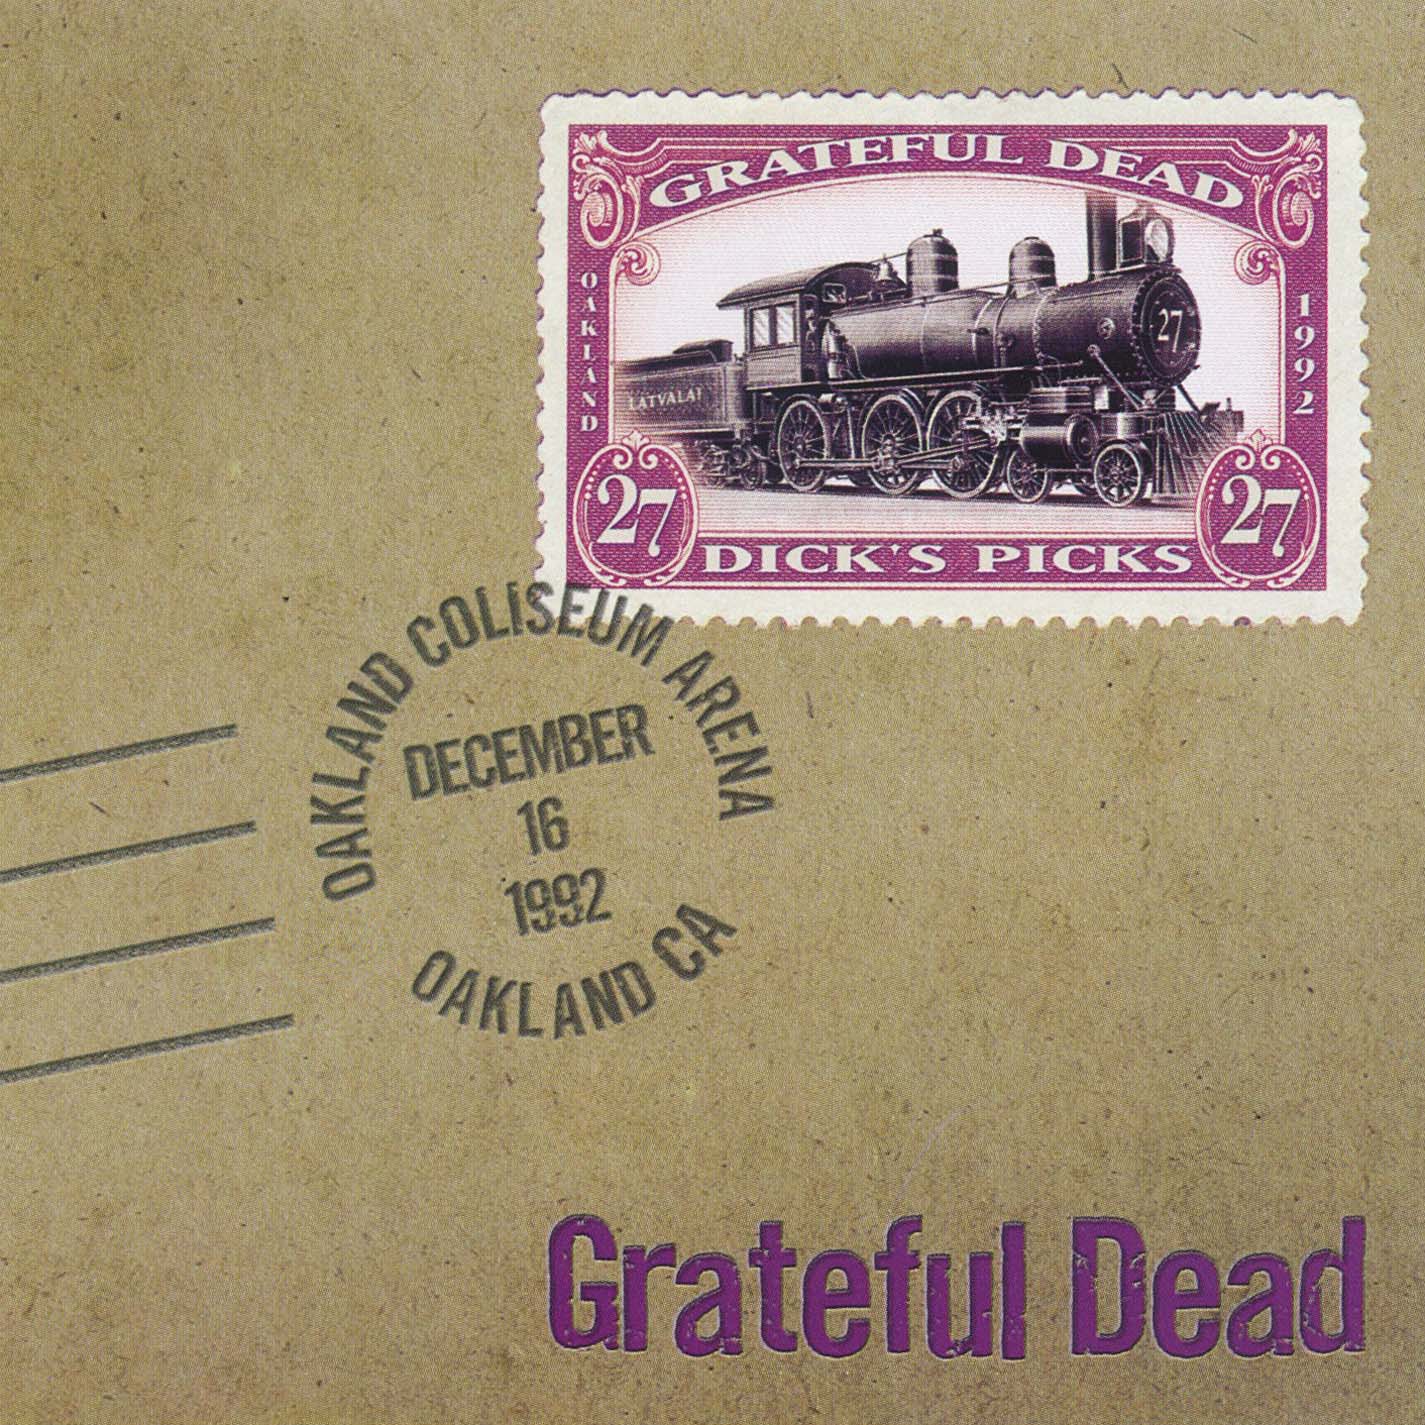 Grateful Dead Dick's Picks 27 album cover artwork